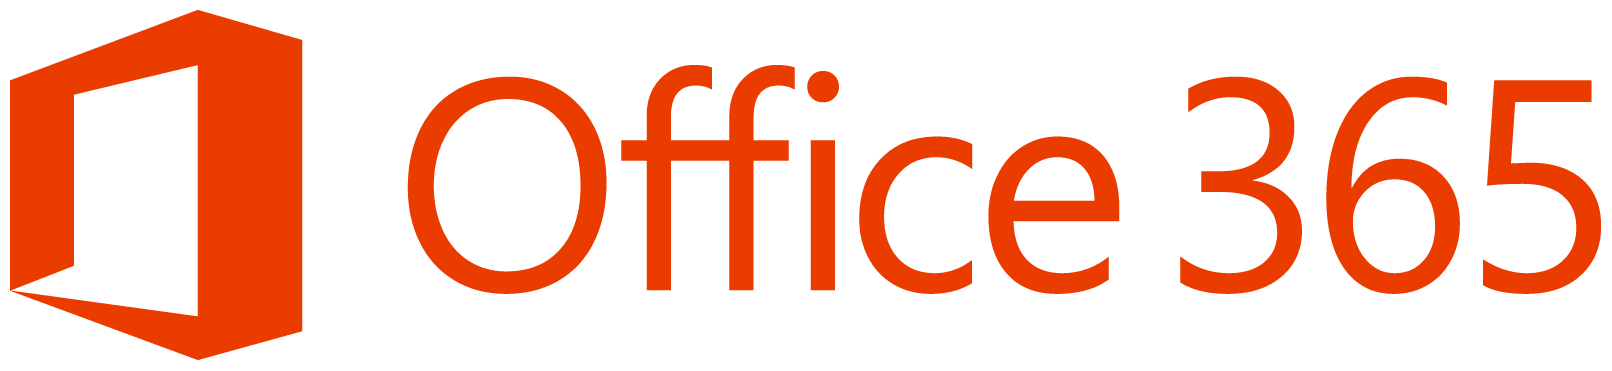 Office_365_logo_(2013-2019)